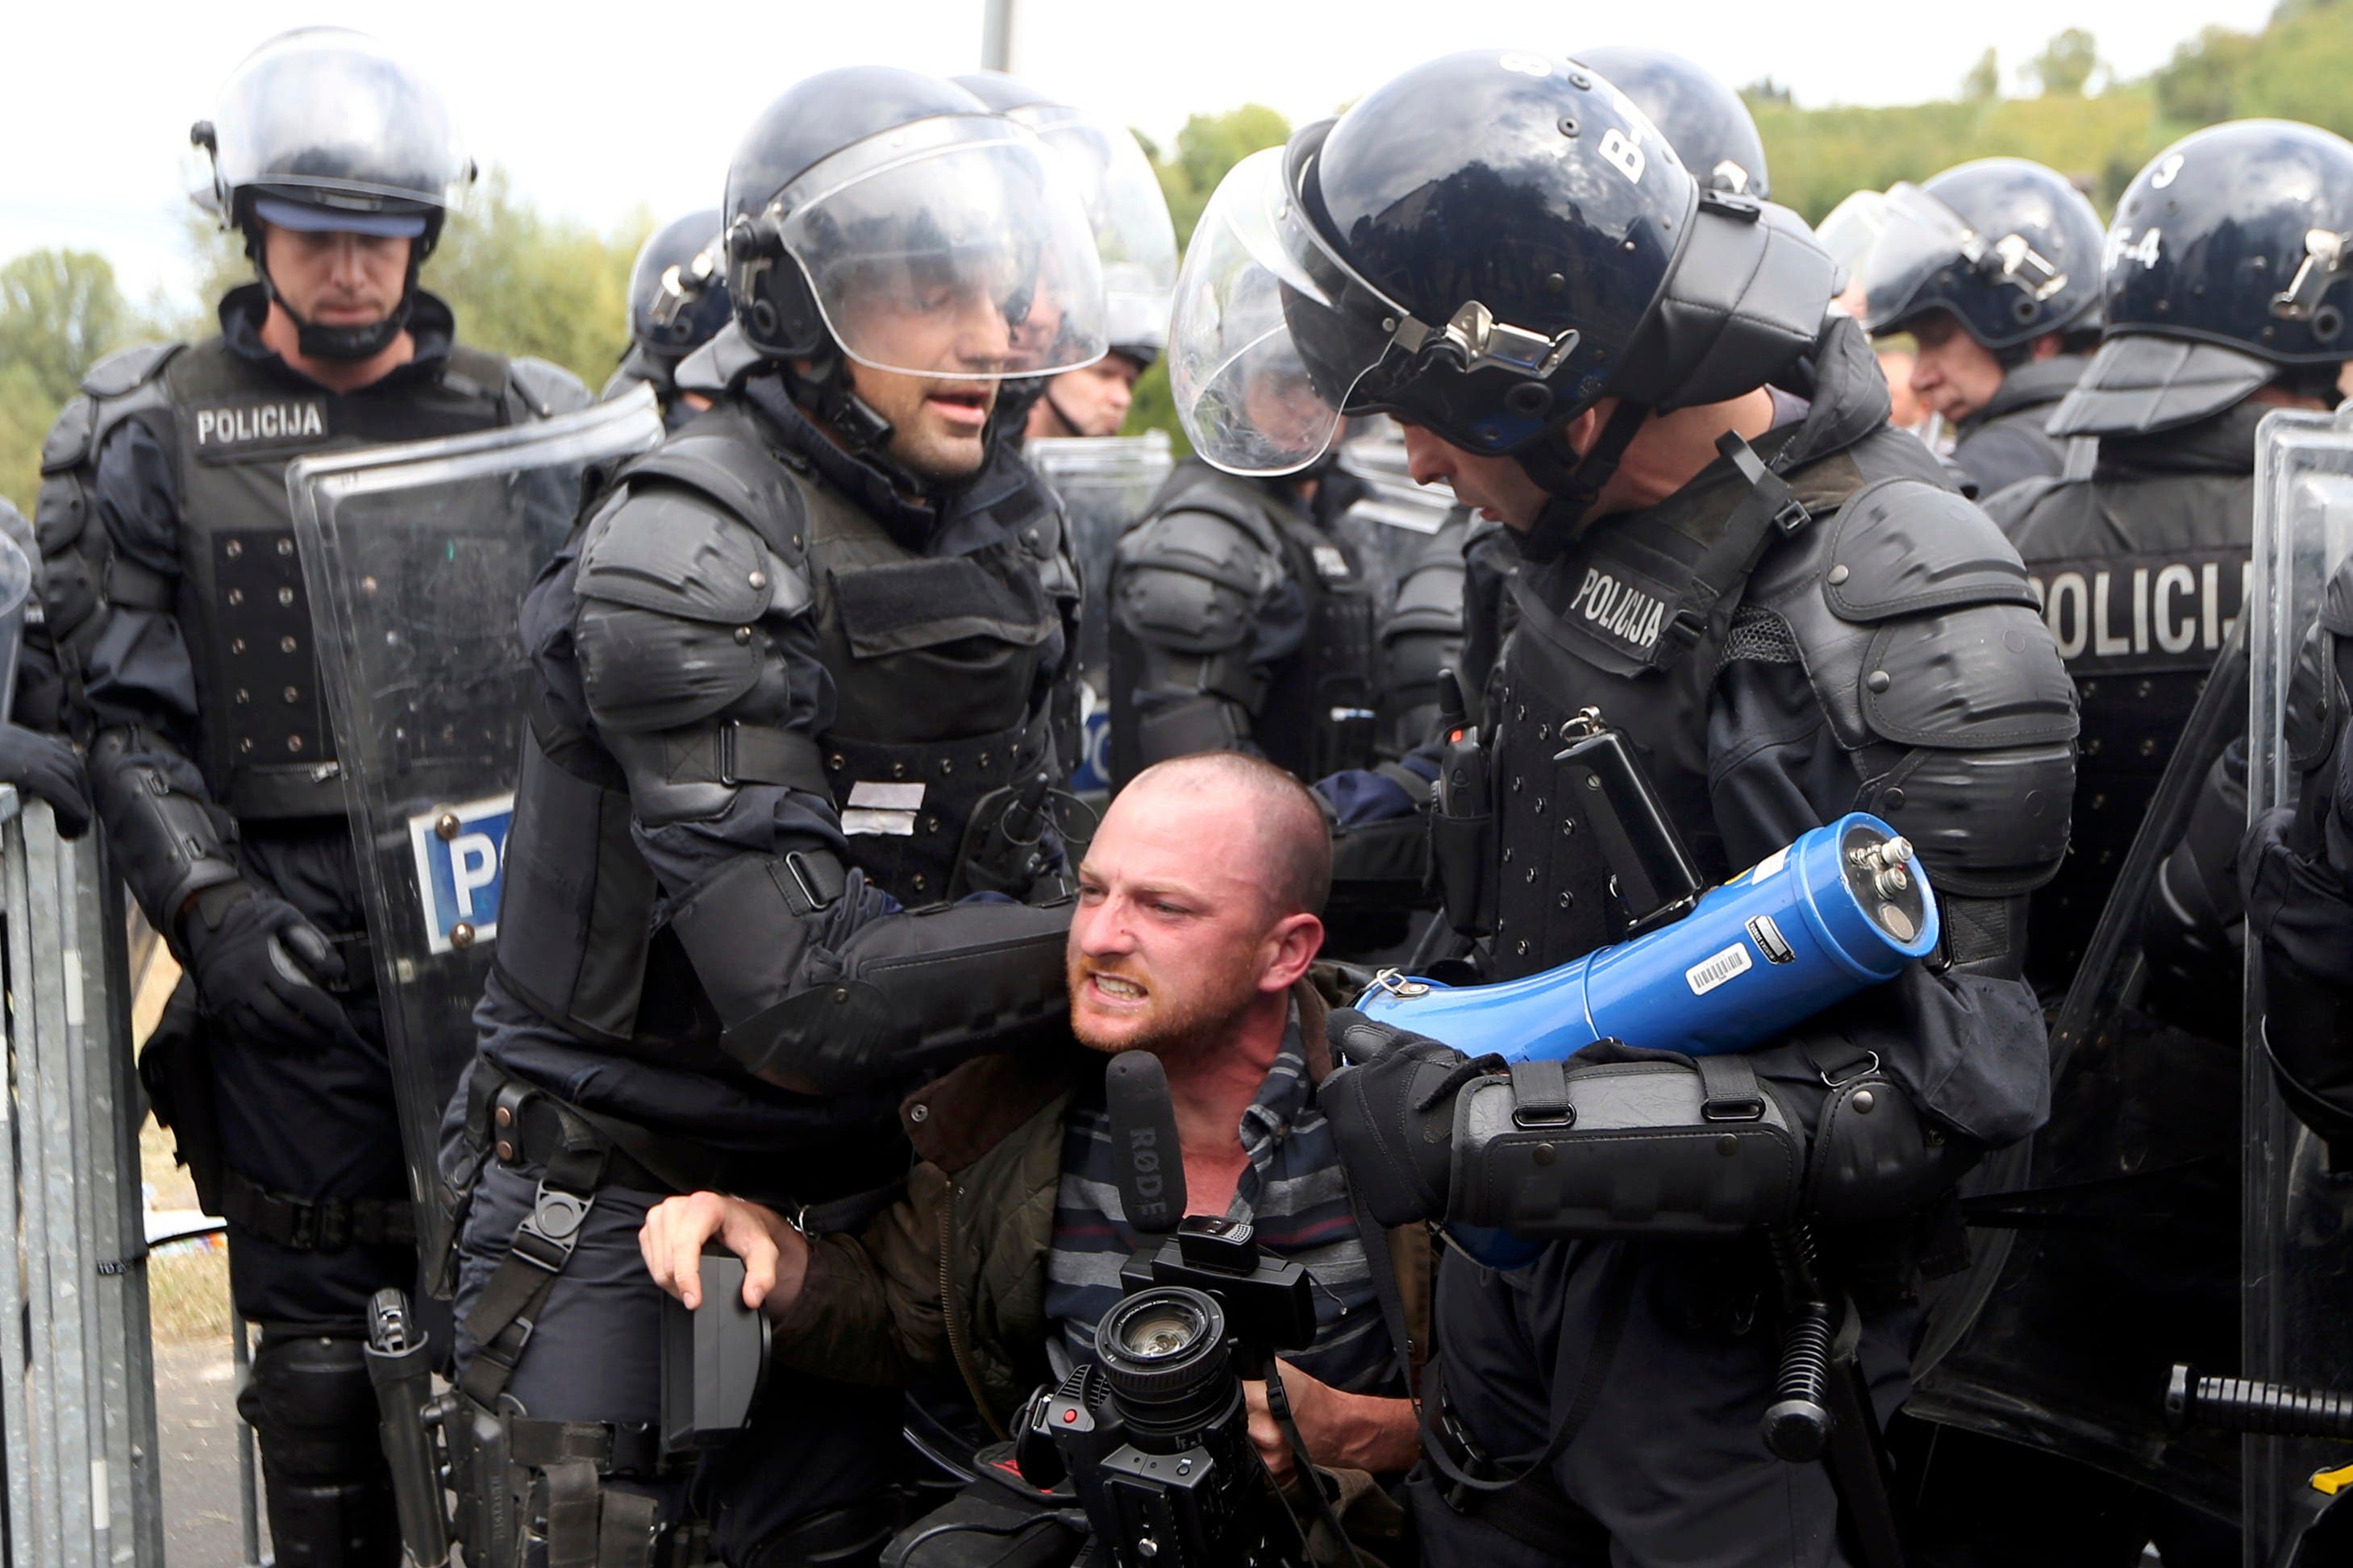 Migrants clash with police in Slovenia 